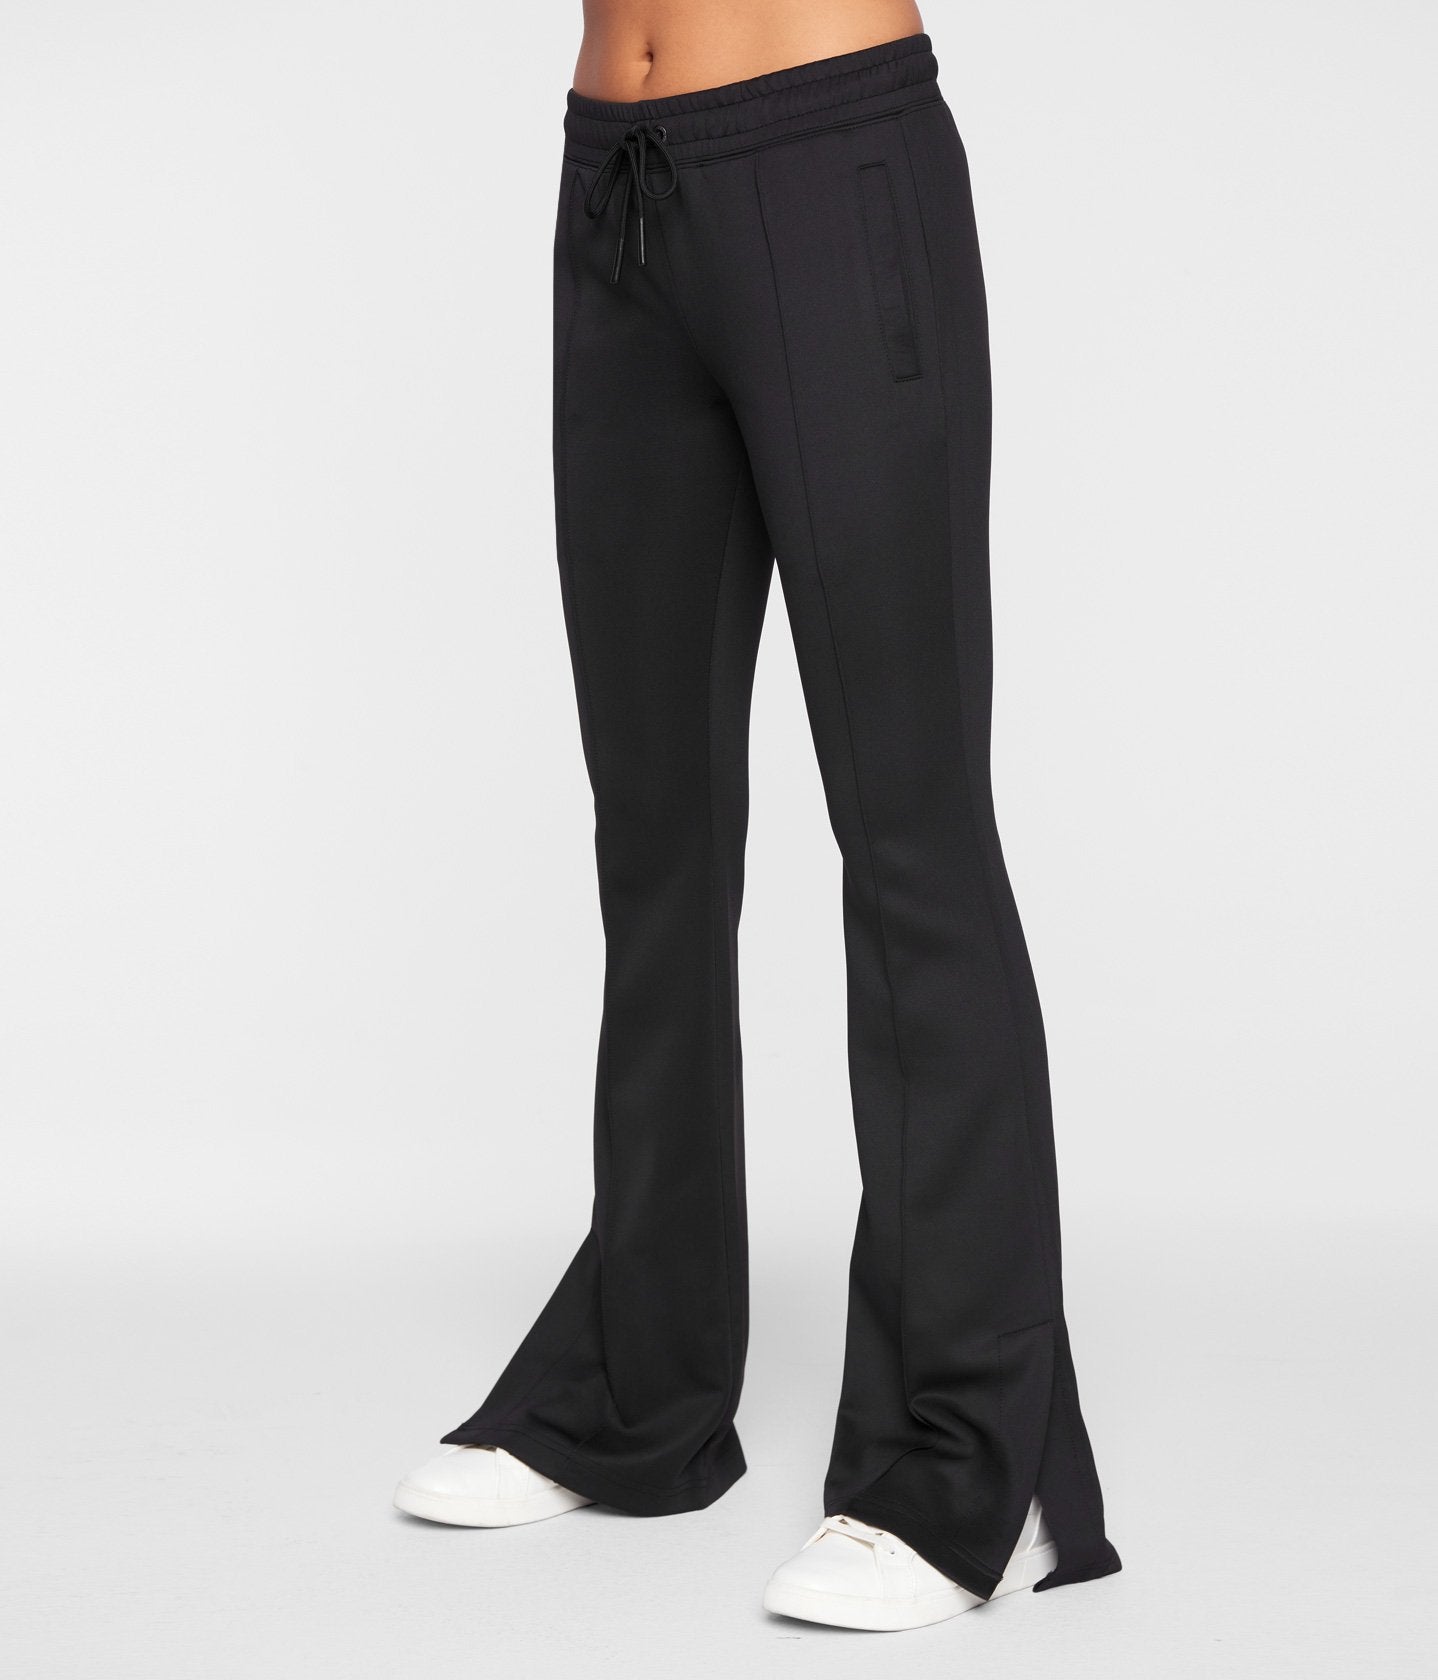 Gerry Weber Black Pamela Flare Dress Pants Women's Size 6R New